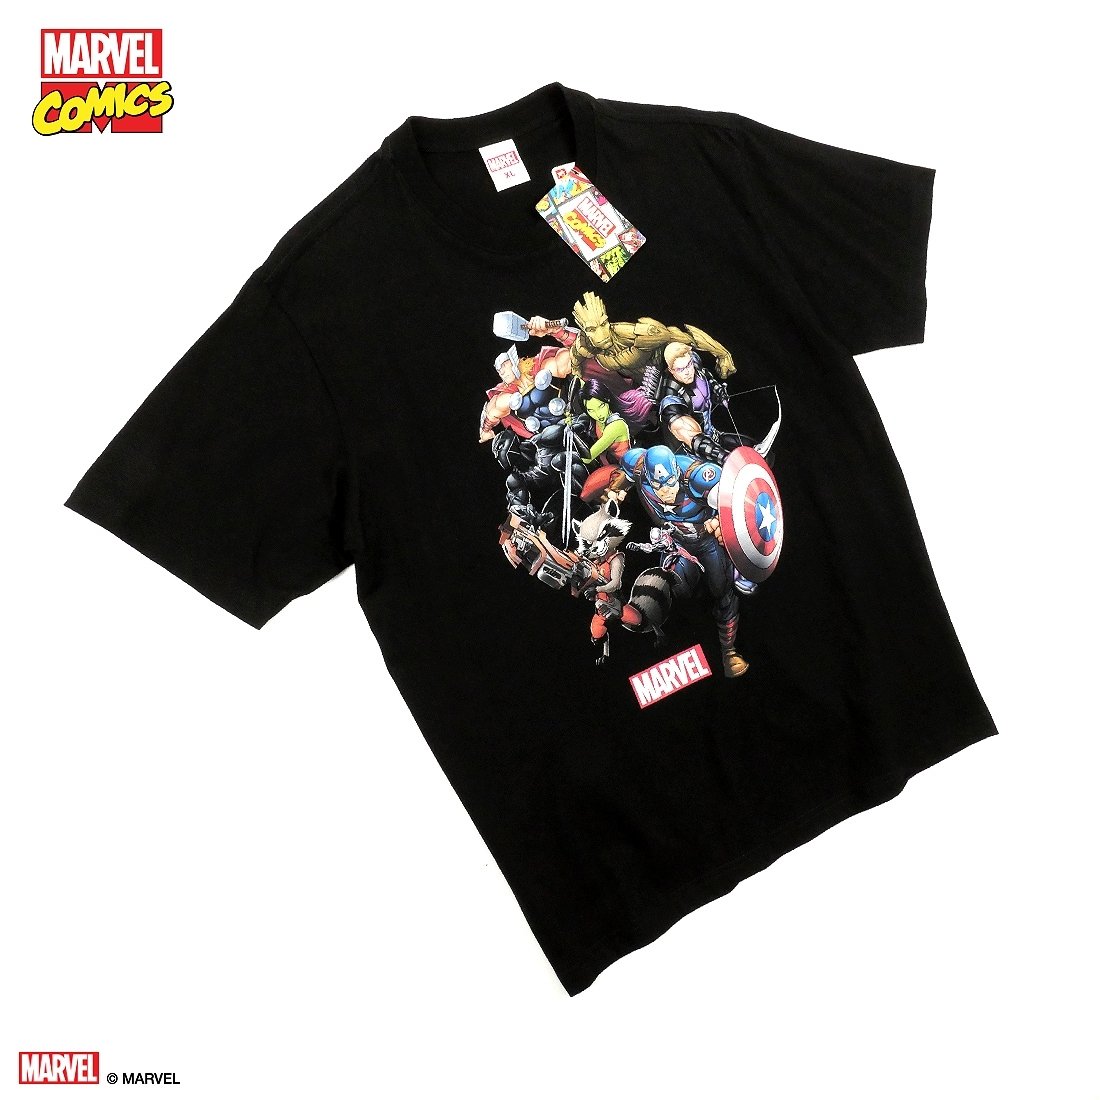 Avengers power7shop Comics T-shirt - Marvel